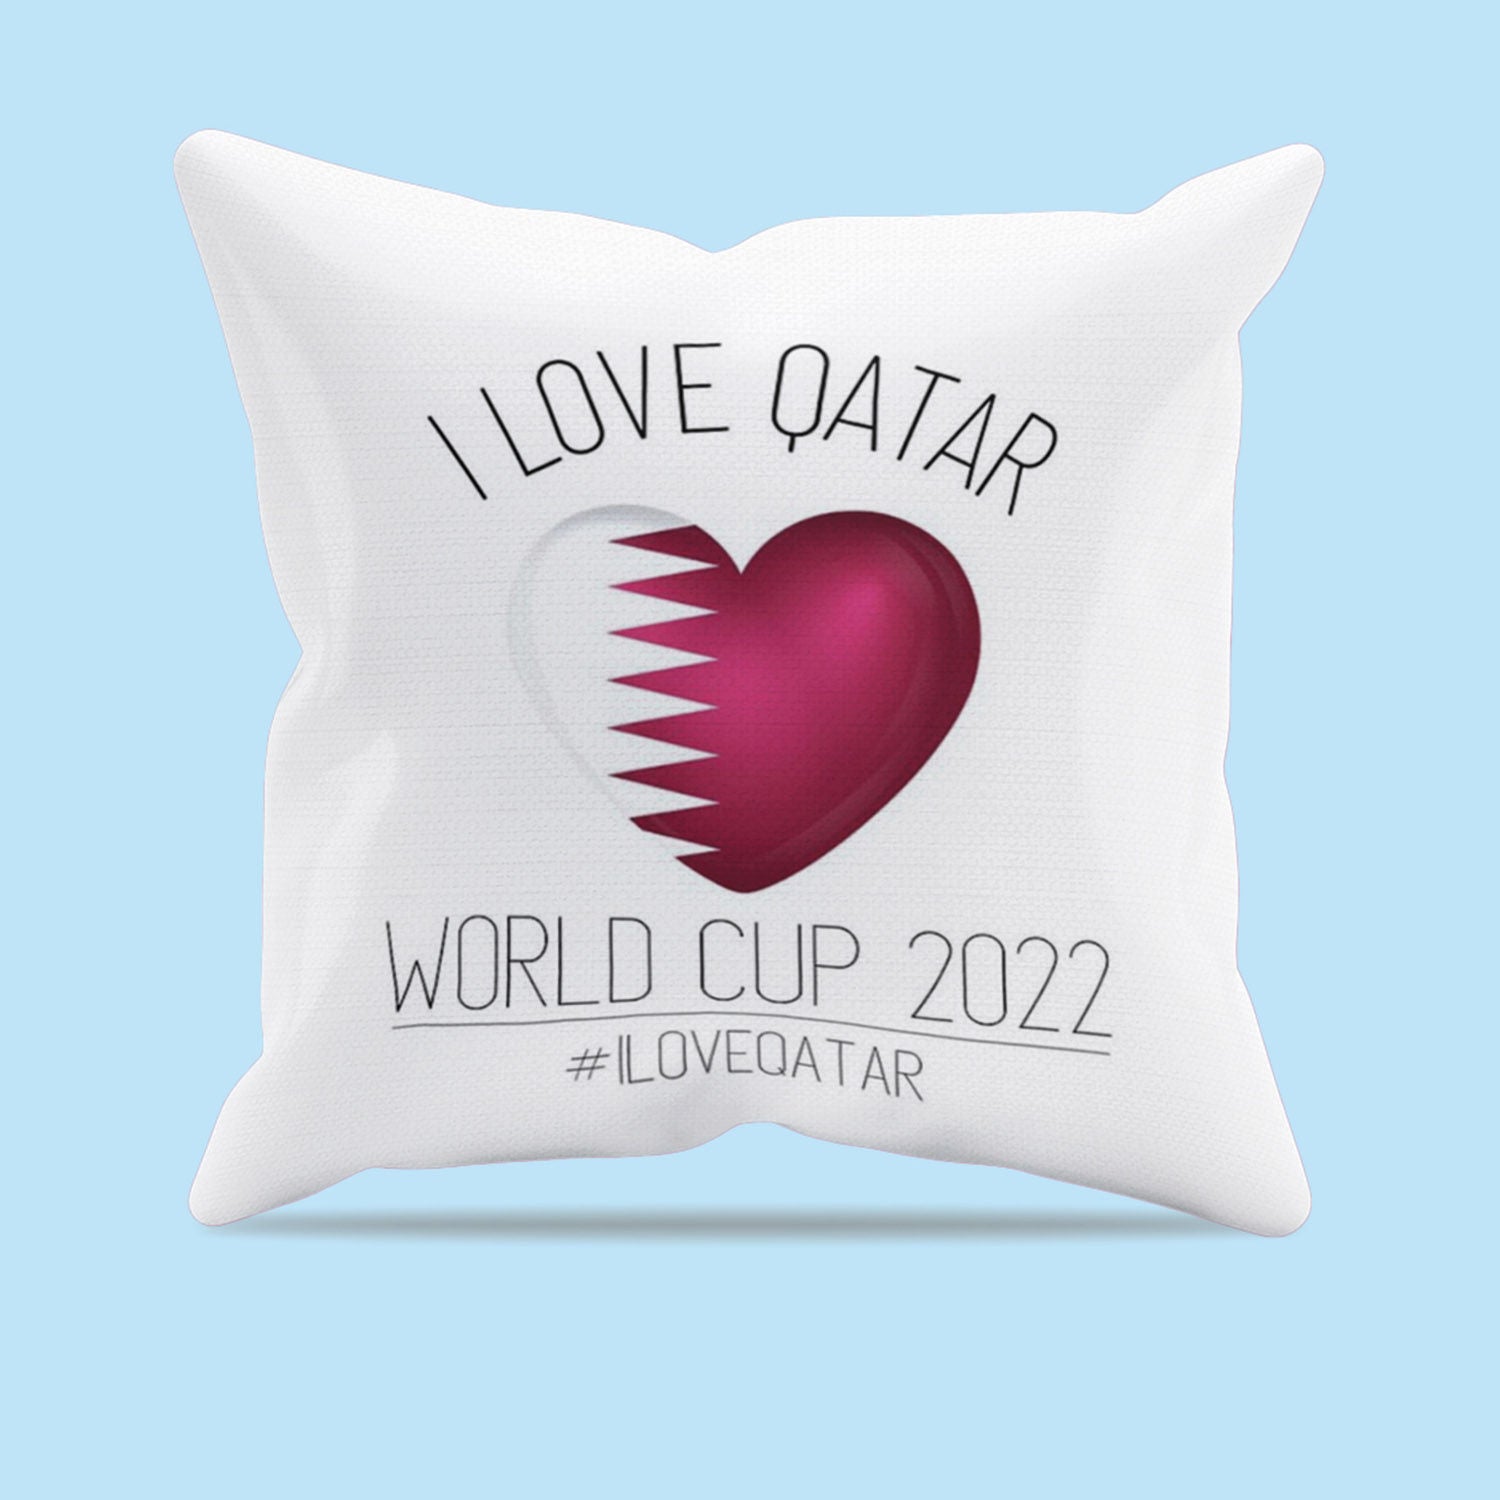 I Love Qatar Cushion